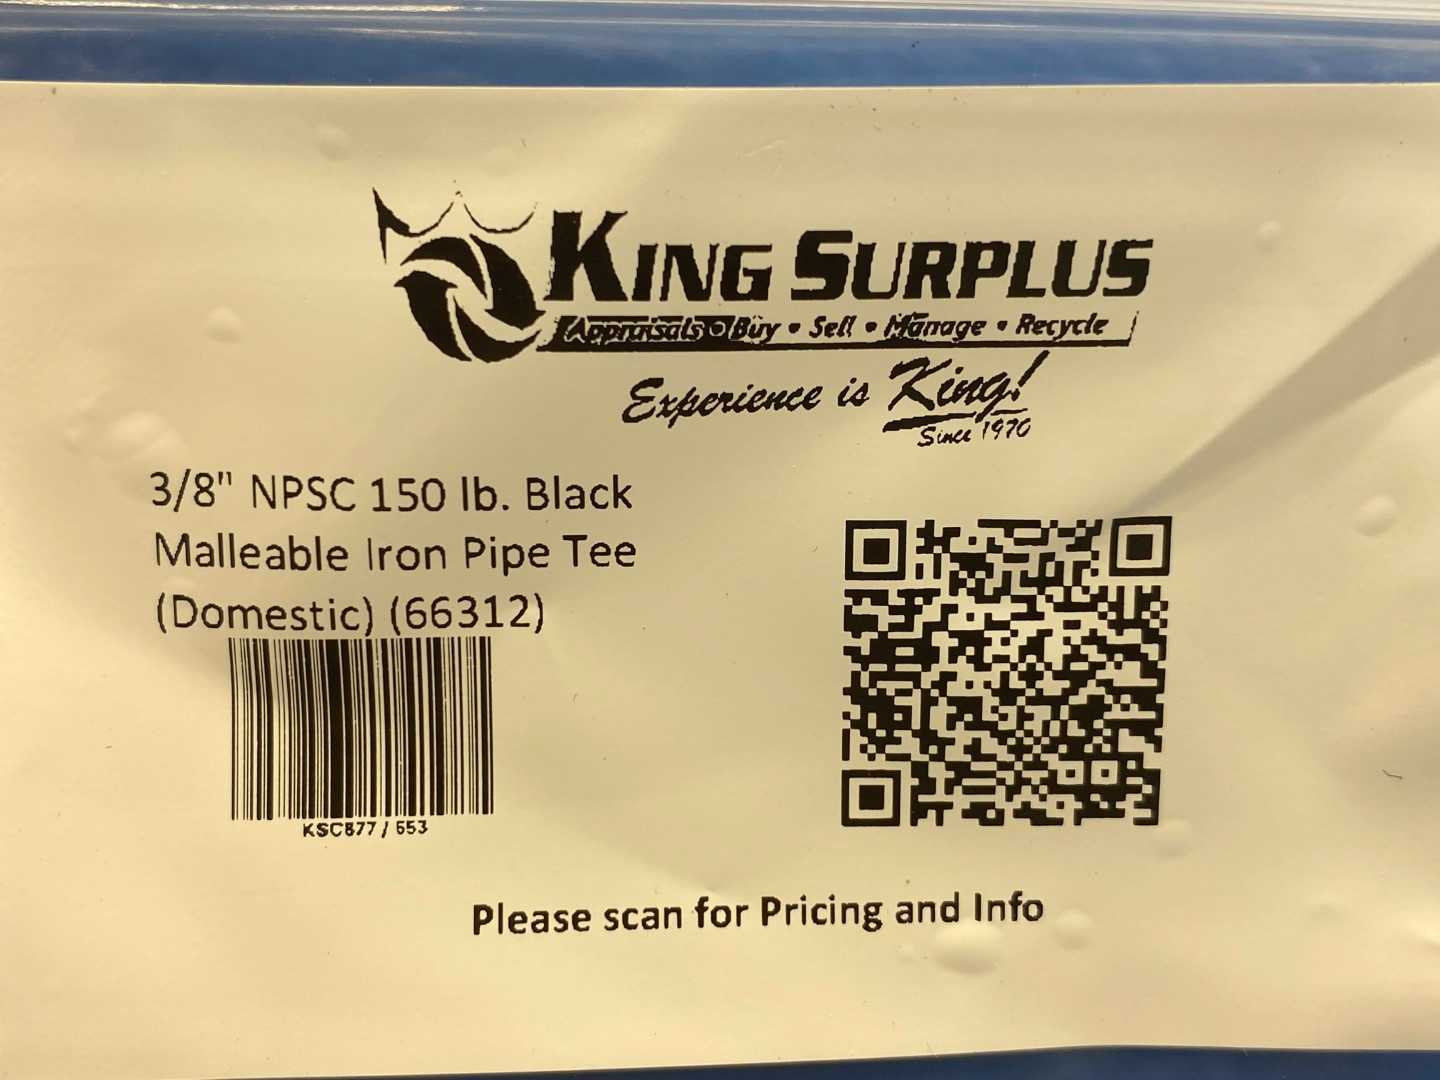 3/8" NPSC 150 lb. Black Malleable Iron Pipe Tee (Domestic) (66312)